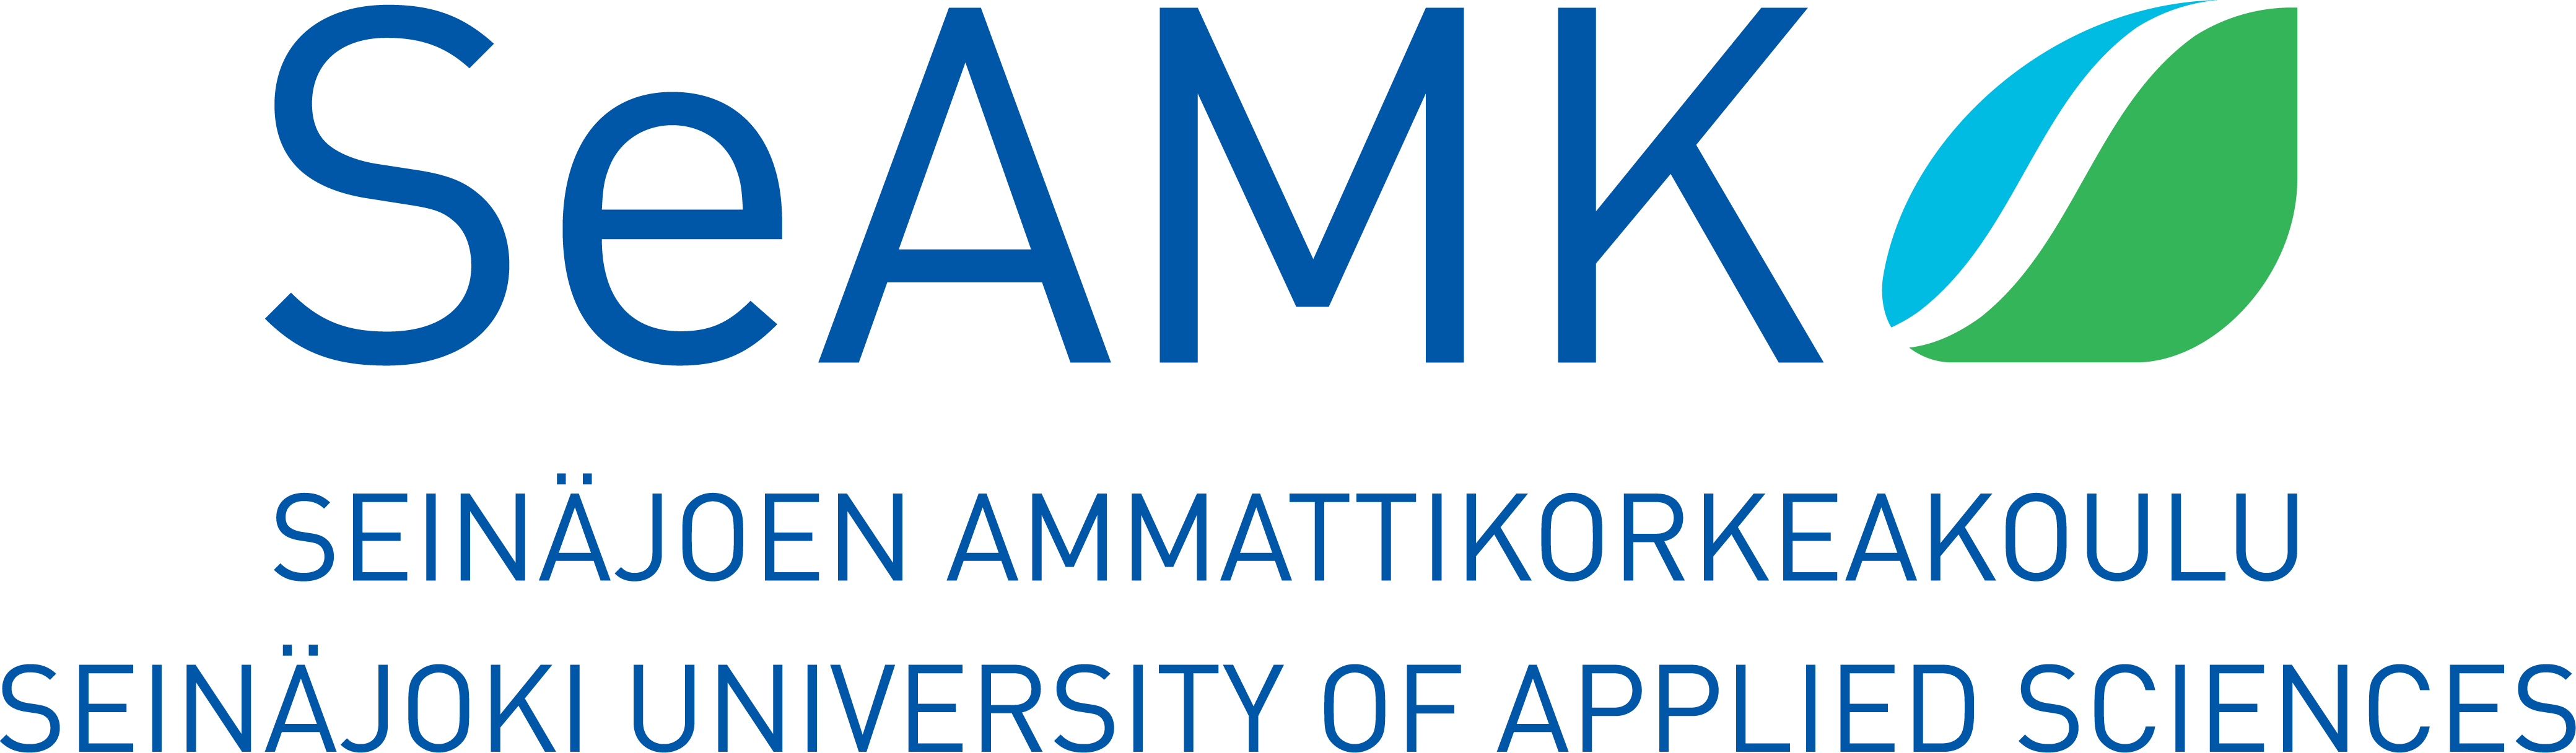 SeAMK-logo